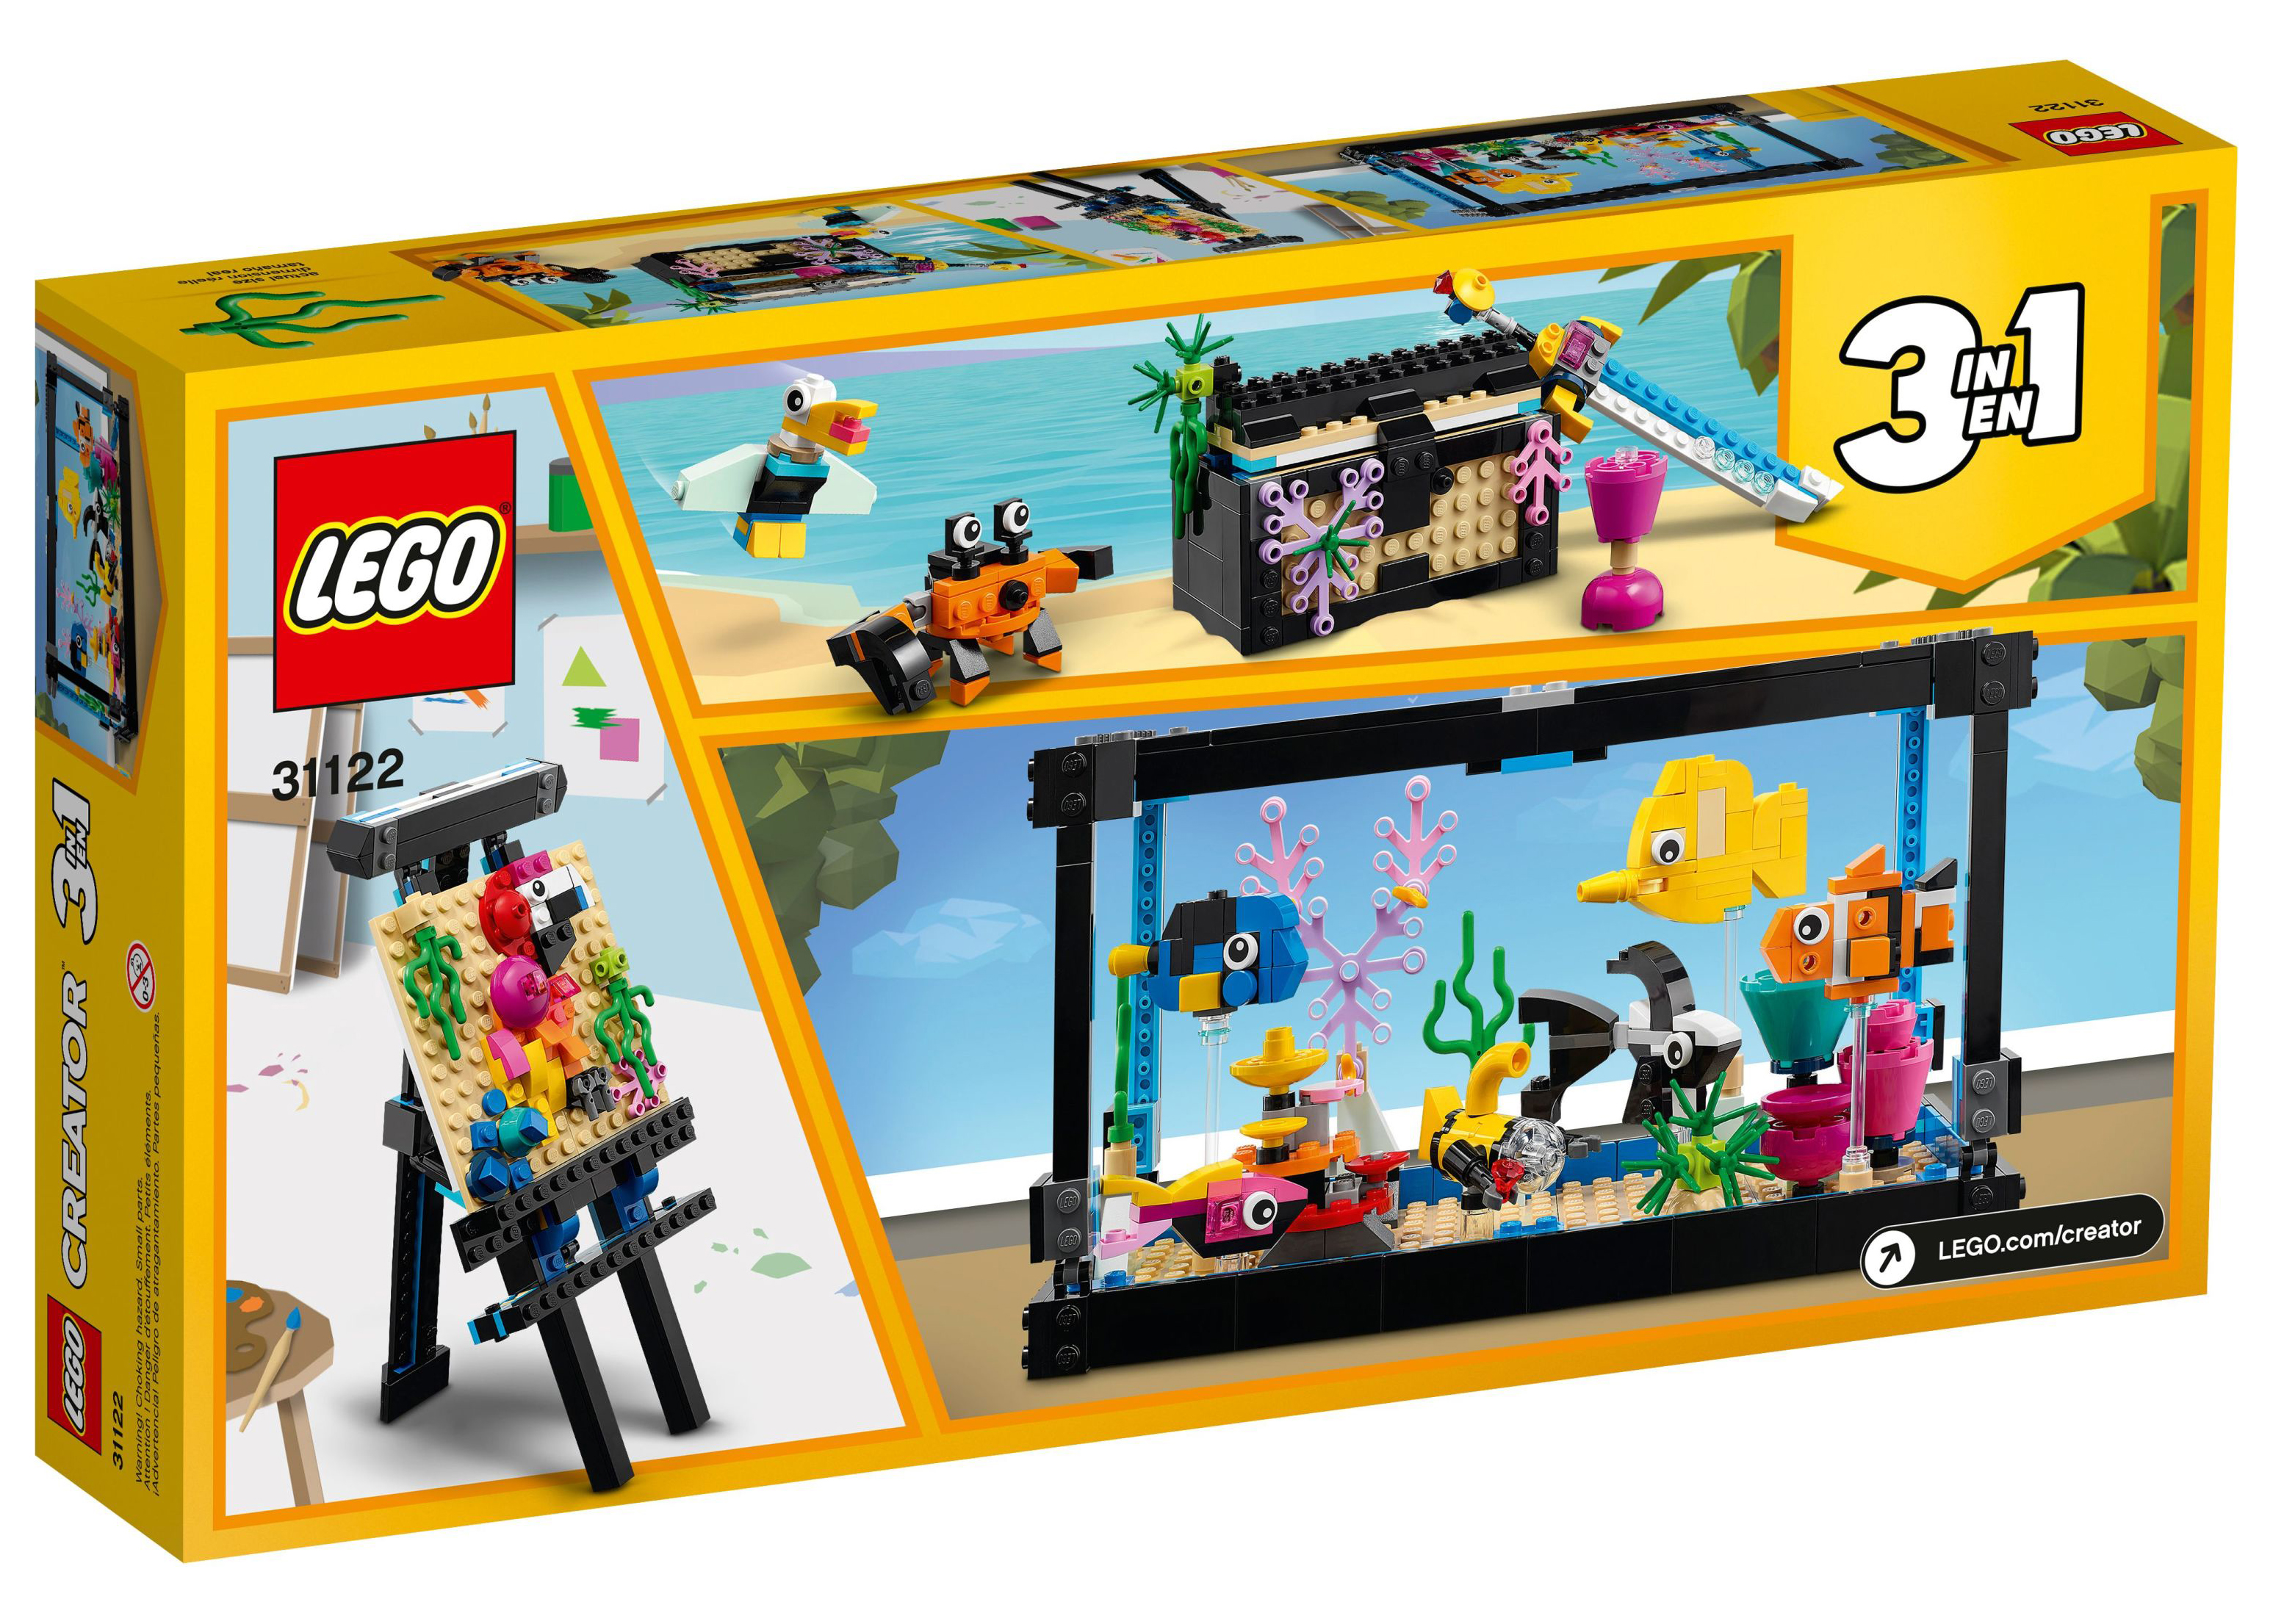 Most Popular Lego Sets - Buy on StockX